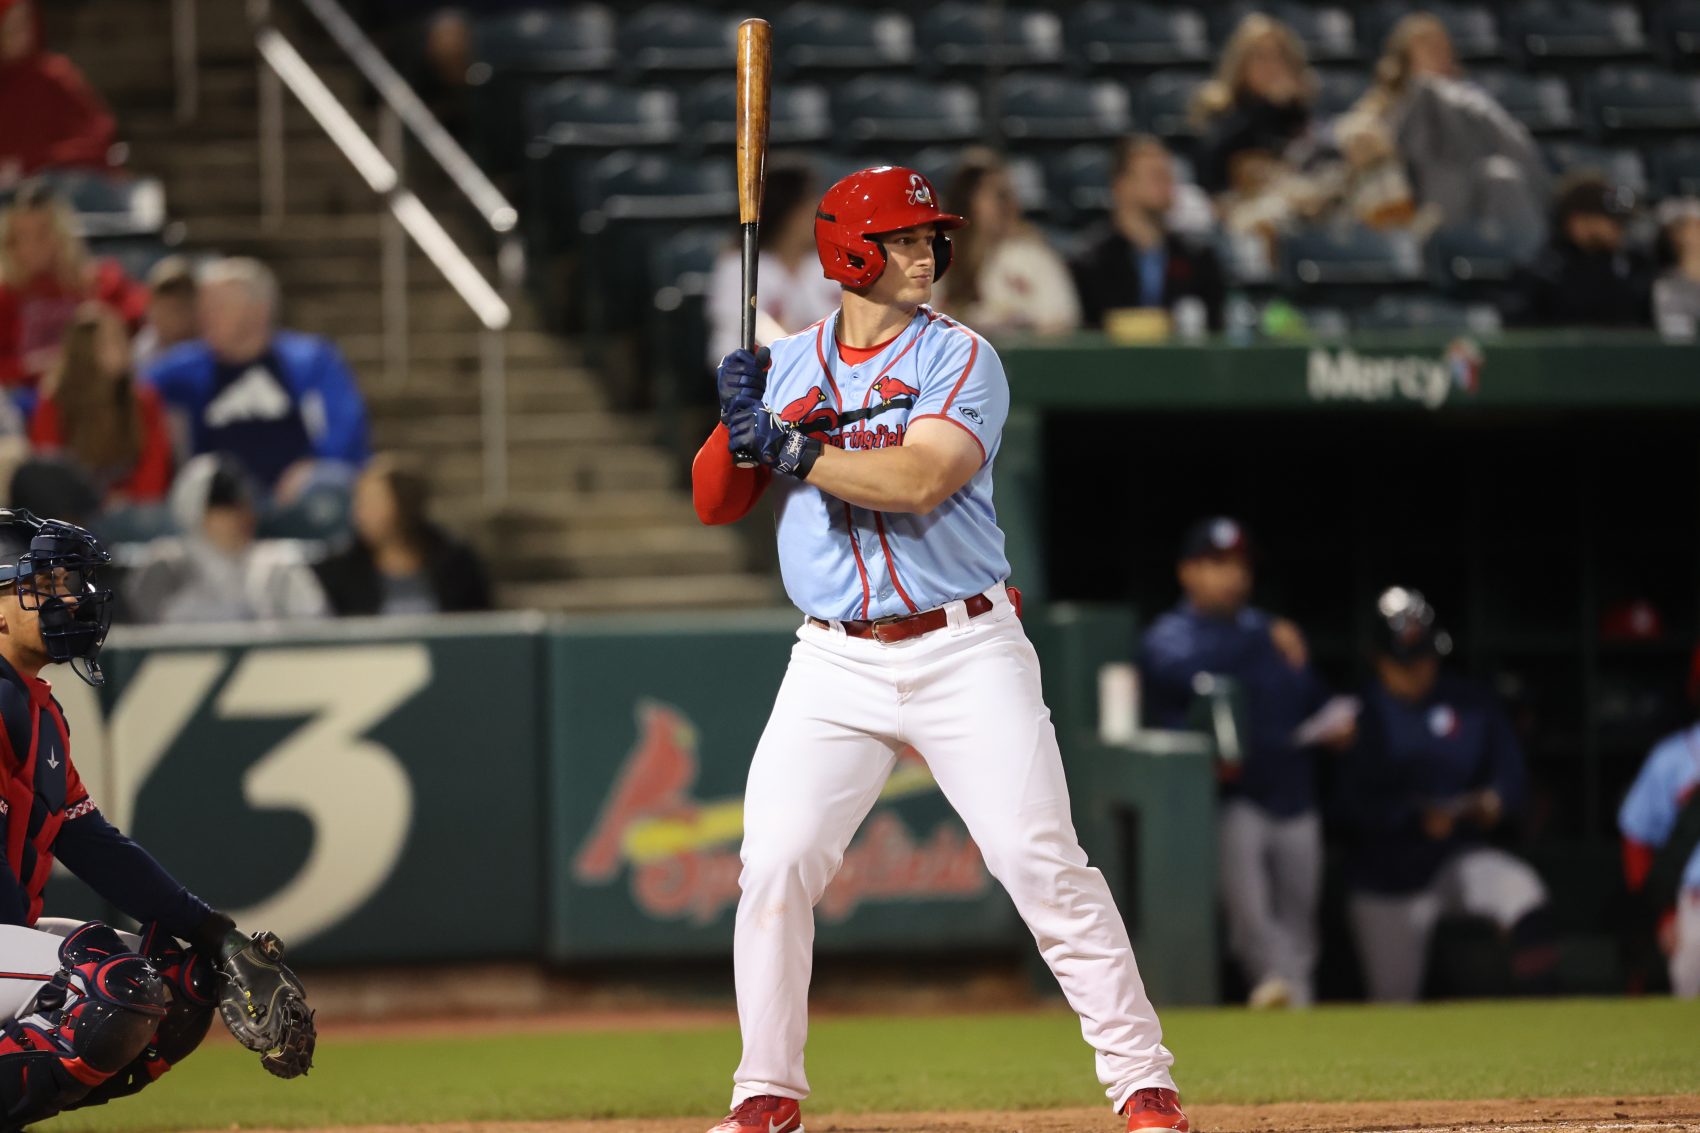 Buchberger battling the rigors of minor league baseball in the St. Louis Cardinals organization